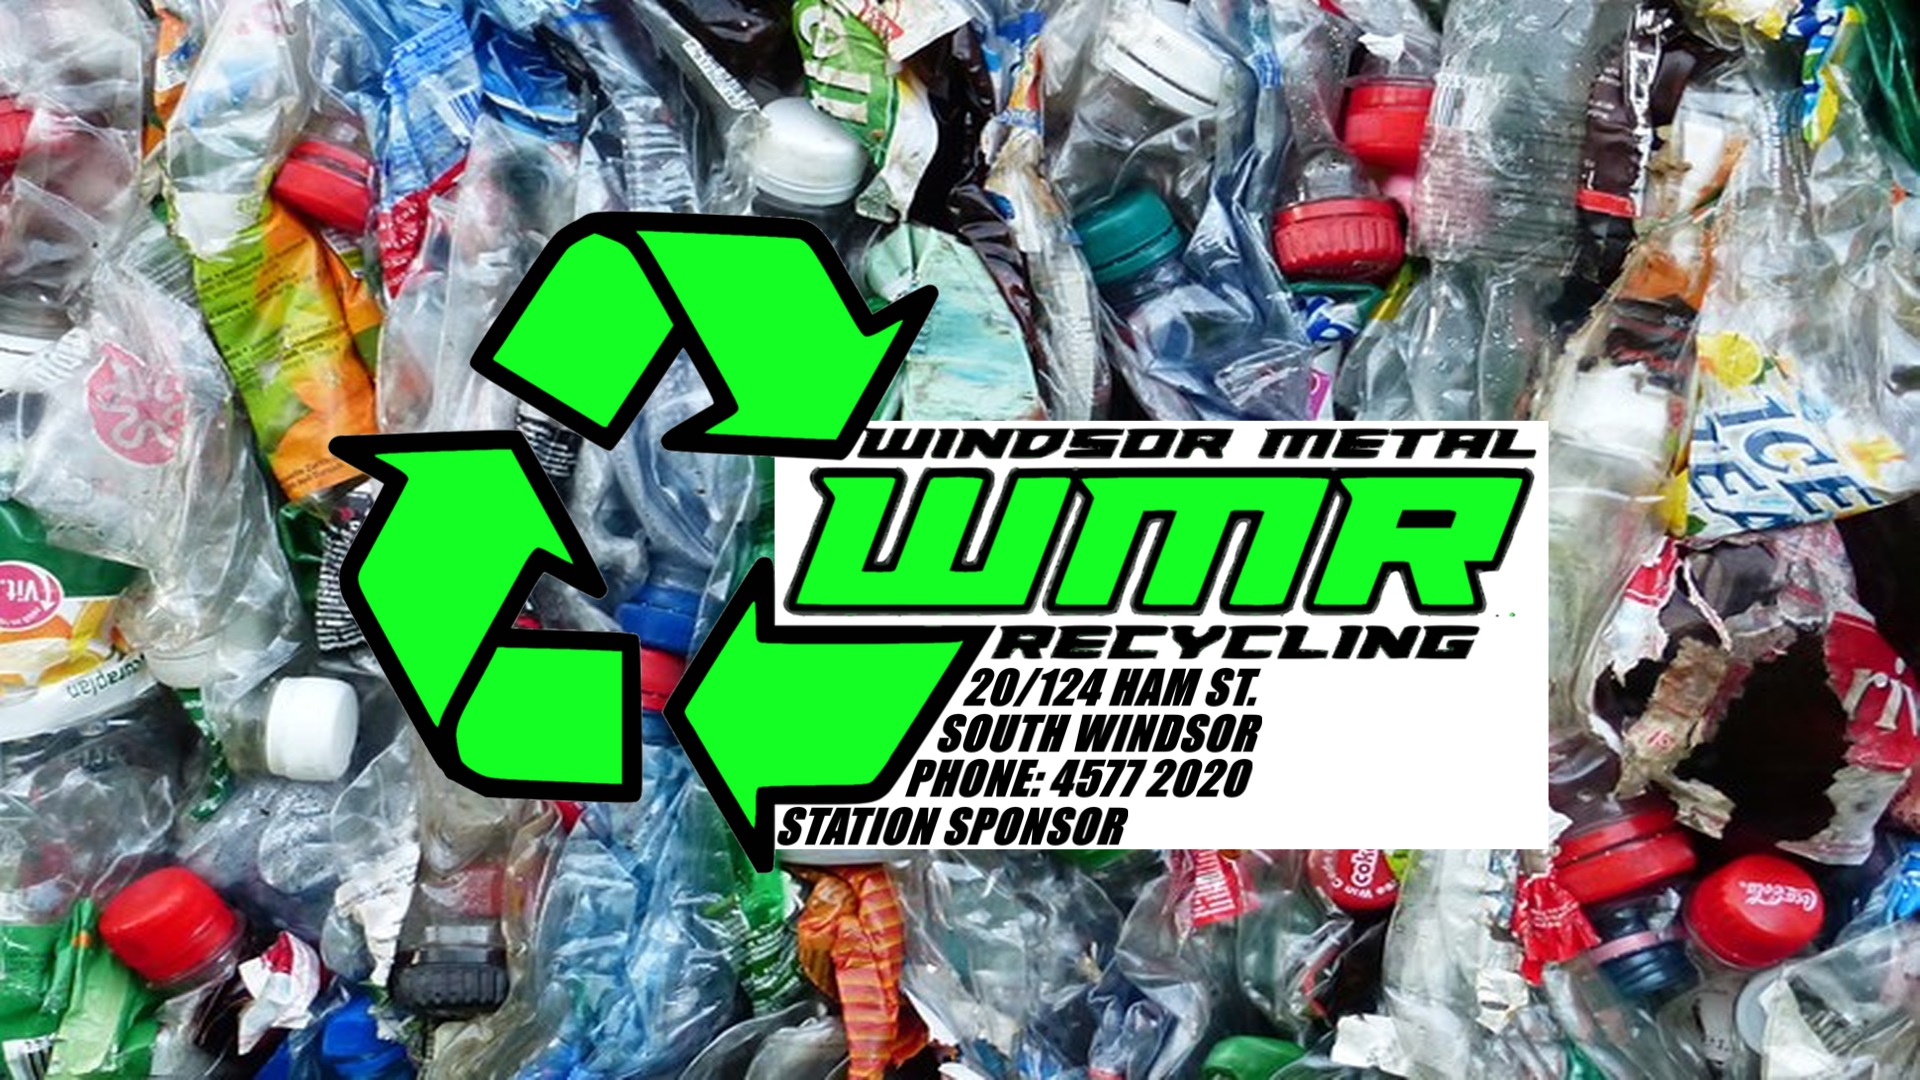 Windsor Metal Recycling